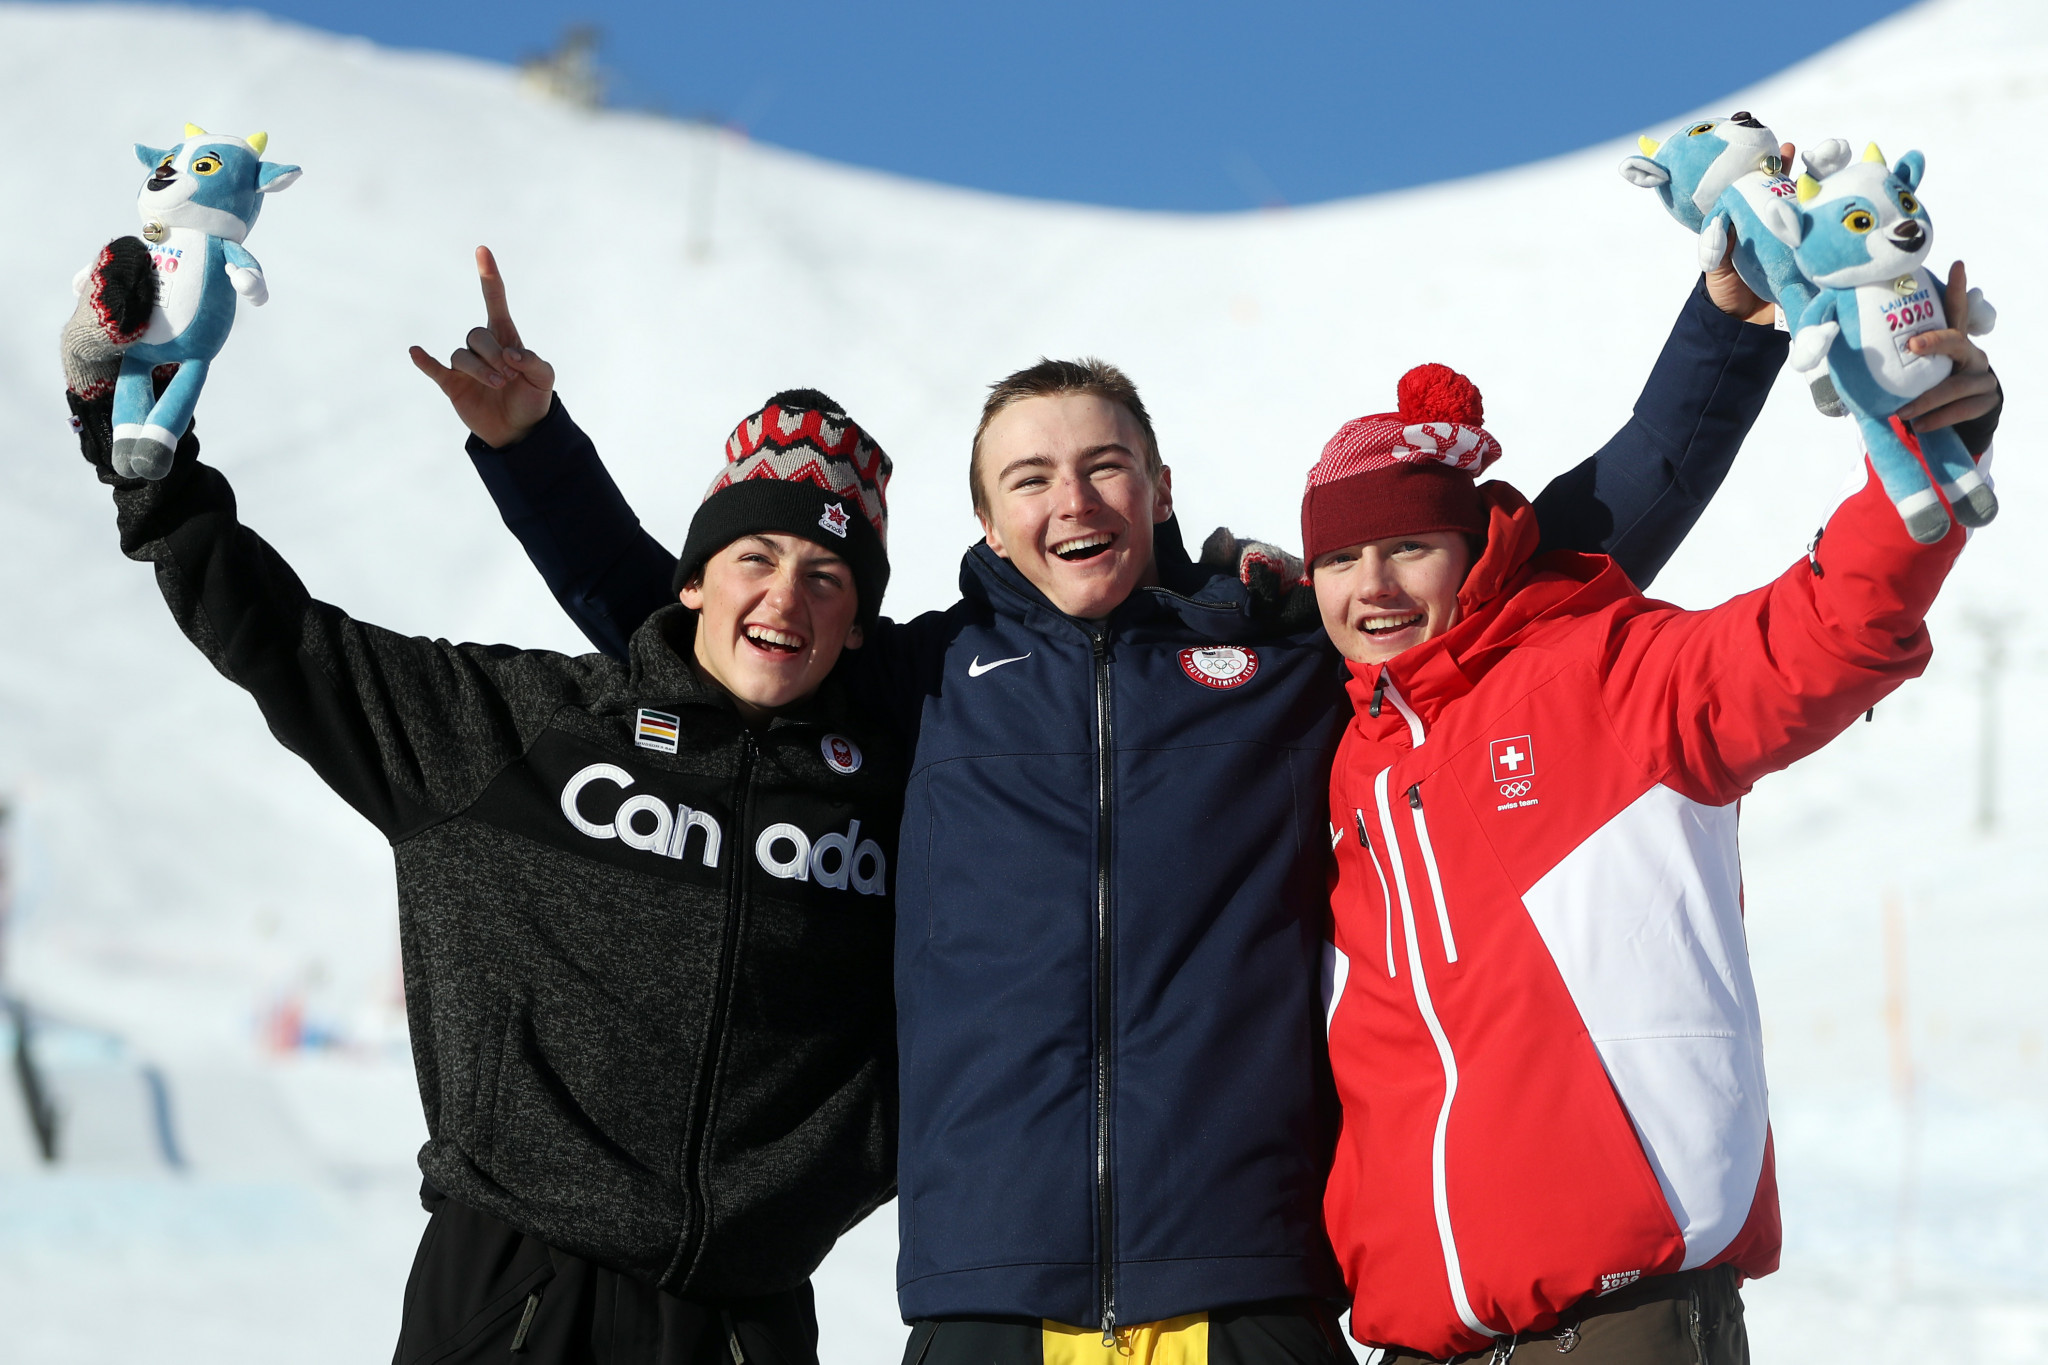 United States' Dusty Henricksen won the men’s snowboard slopestyle title ©Getty Images